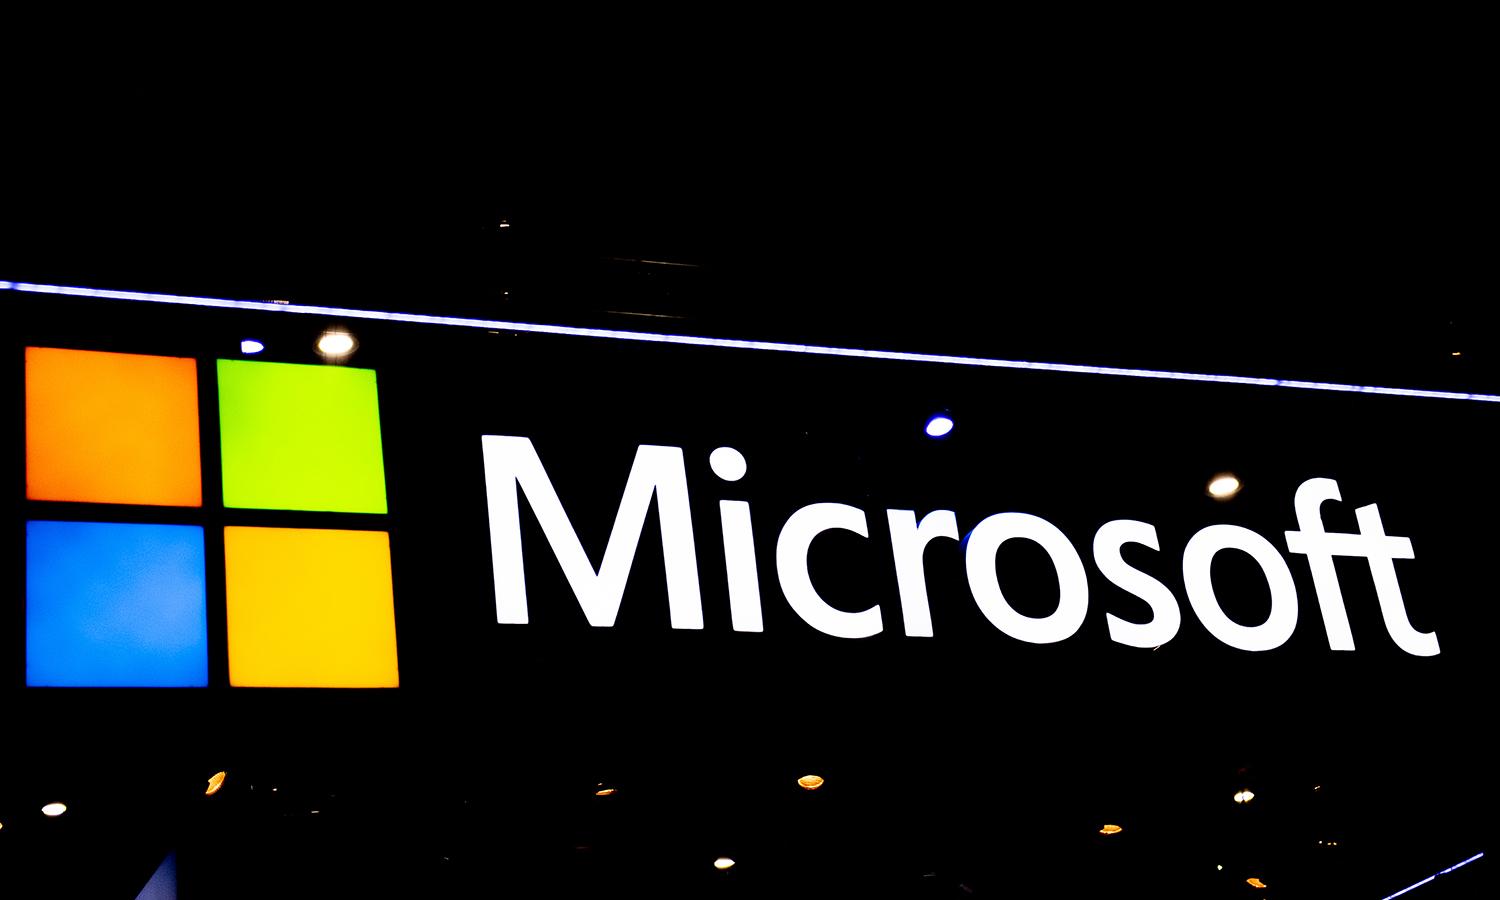 A Microsoft logo is illuminated